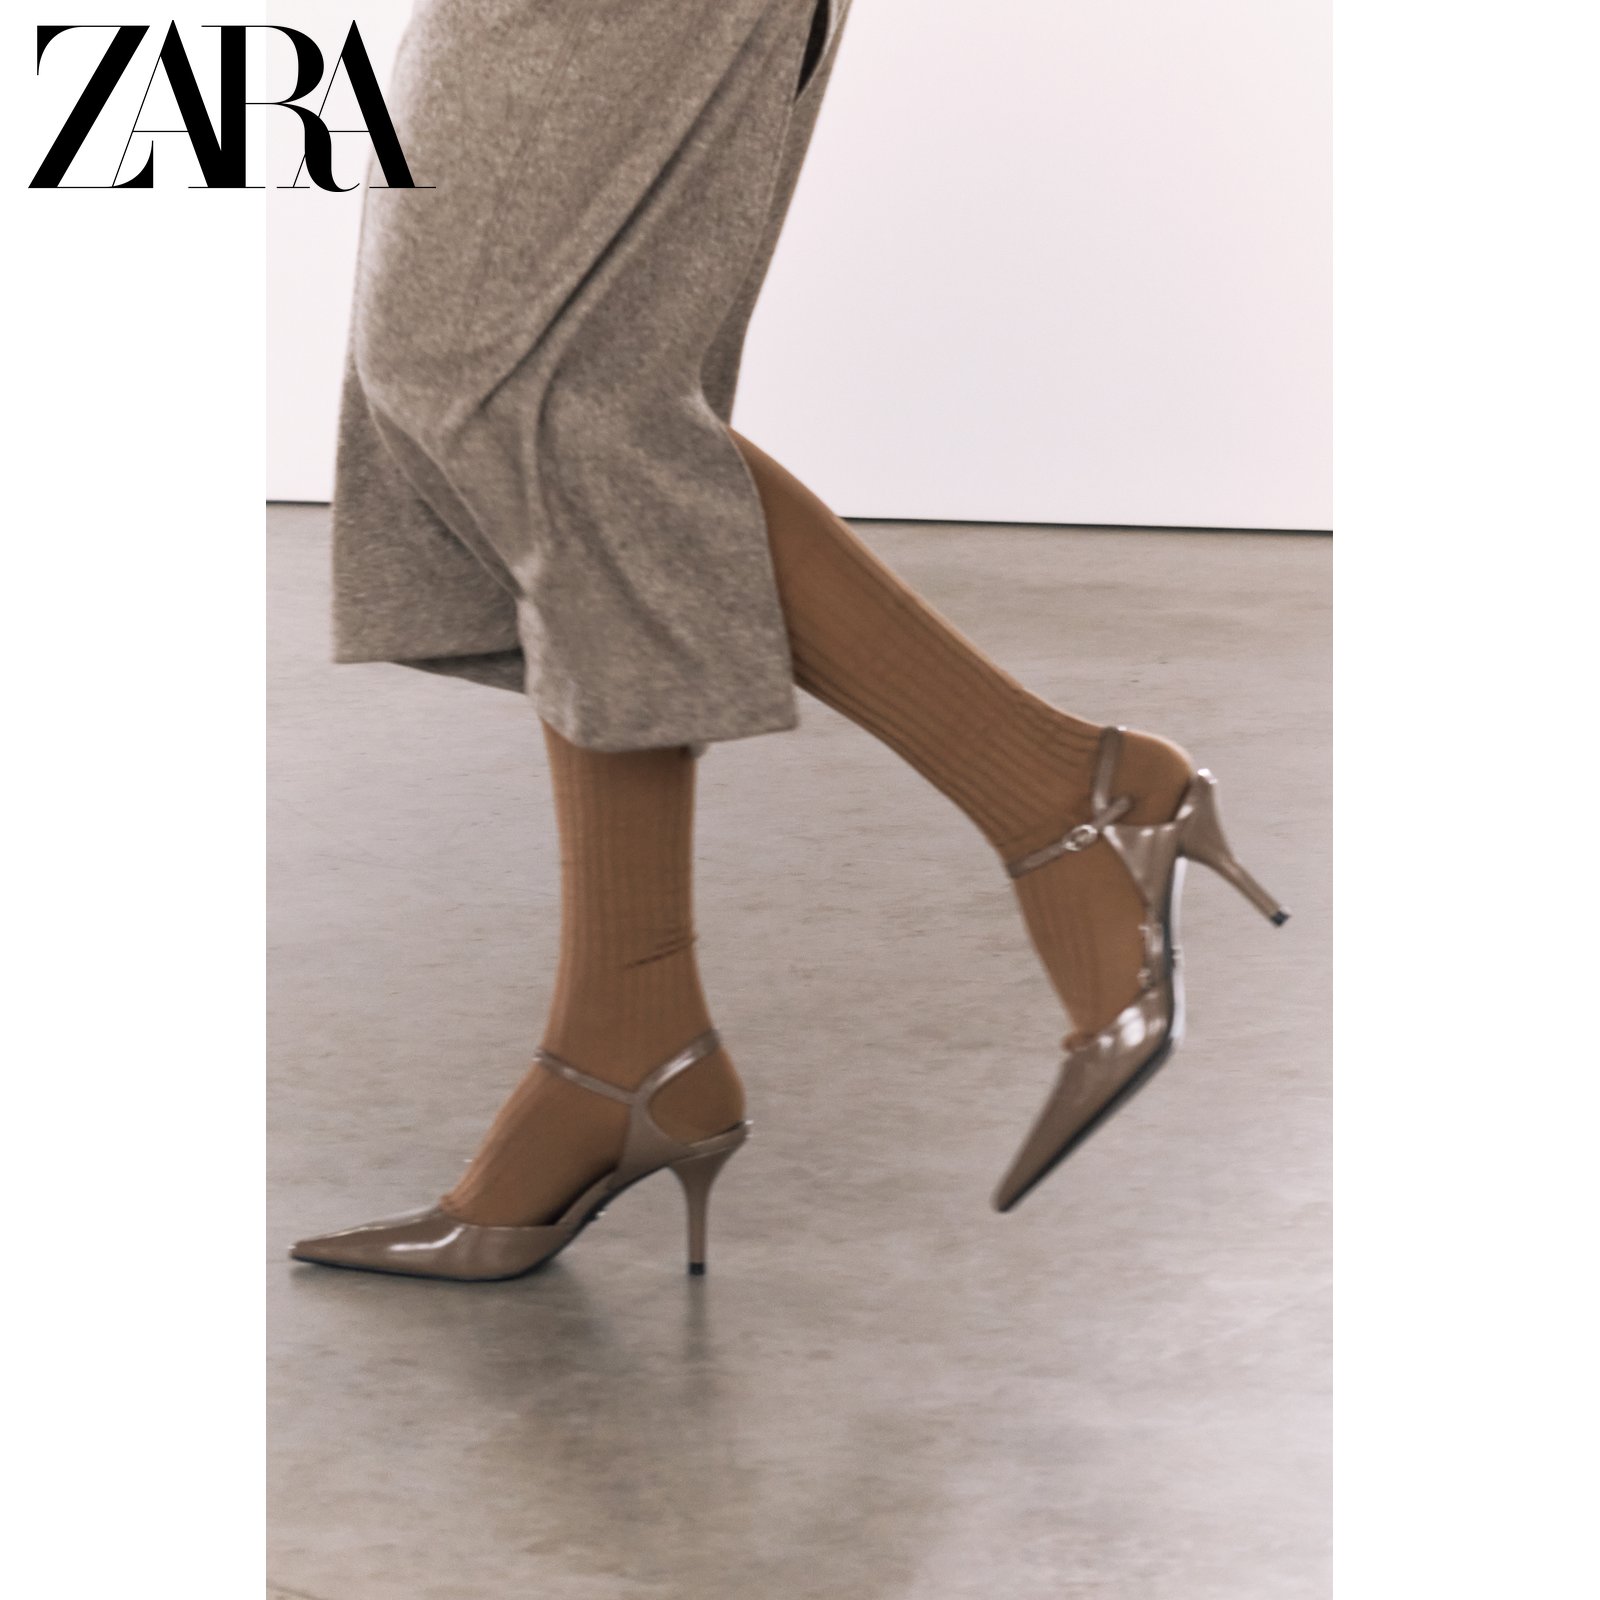 ZARA 春の新作婦人靴ブラウンレトロアンクルストラップスリングバックハイヒール 1205310 131